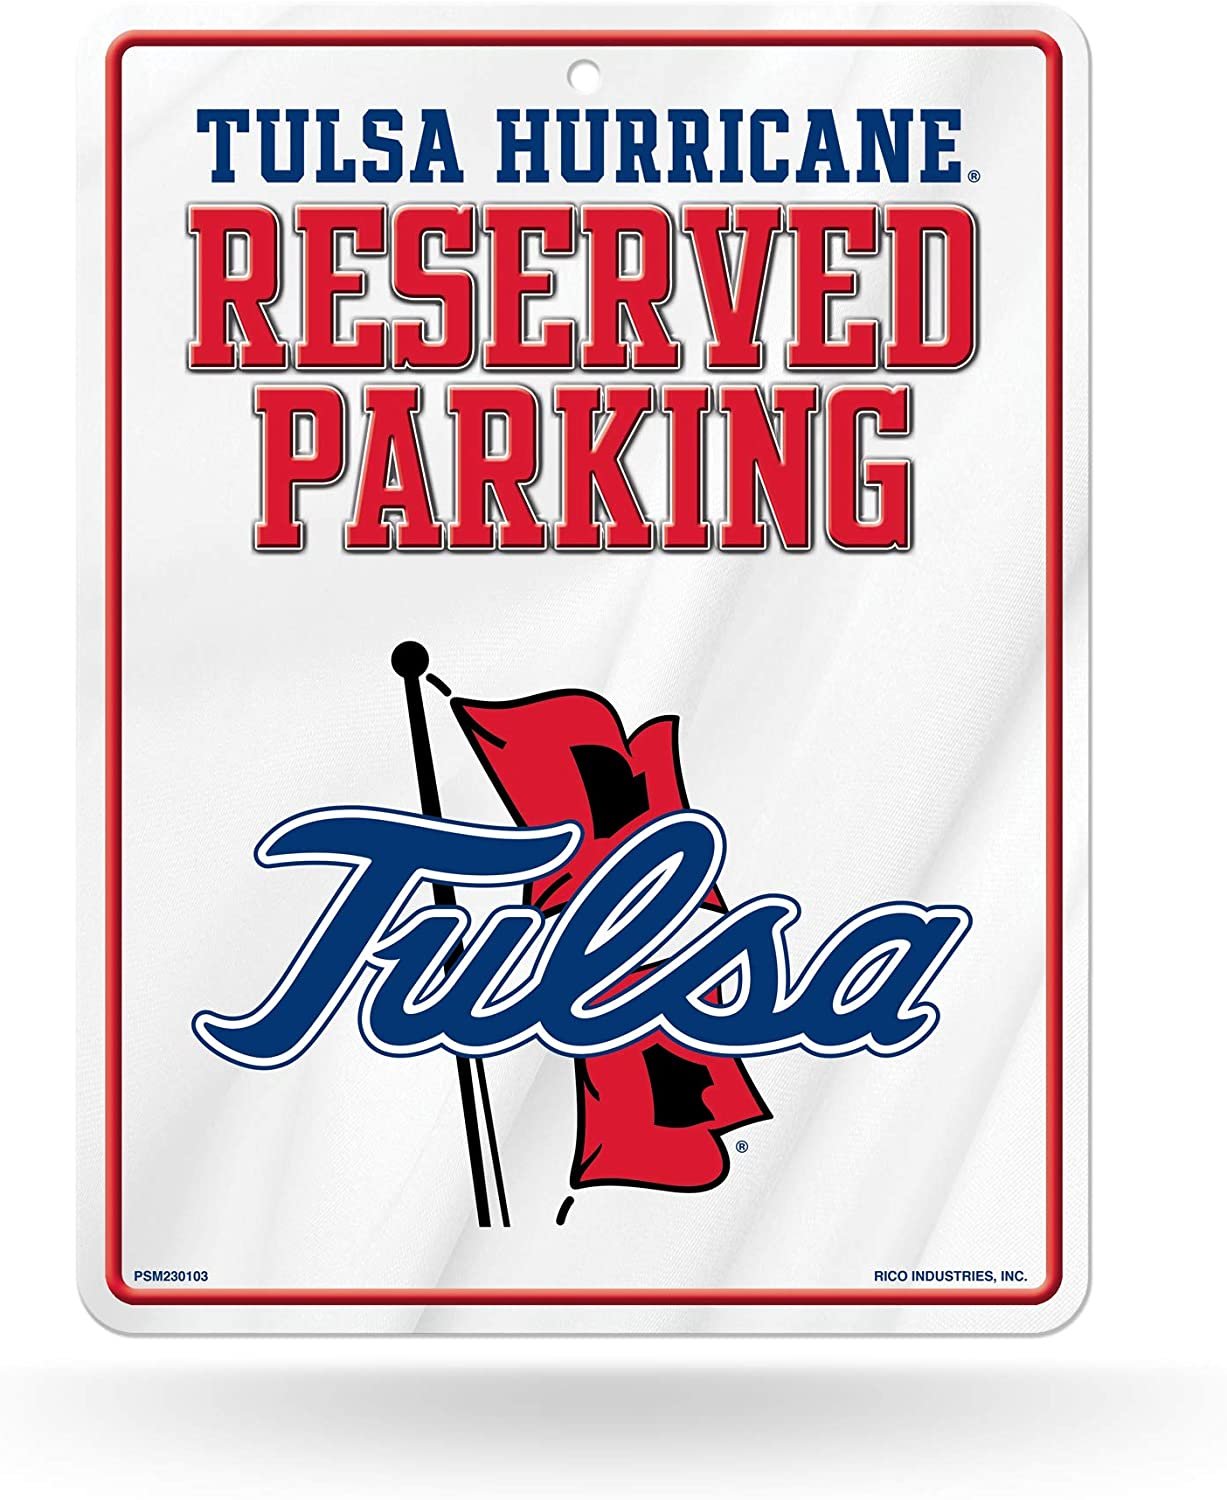 University of Tulsa Golden Hurricane 8x11 Inch Metal Parking Sign